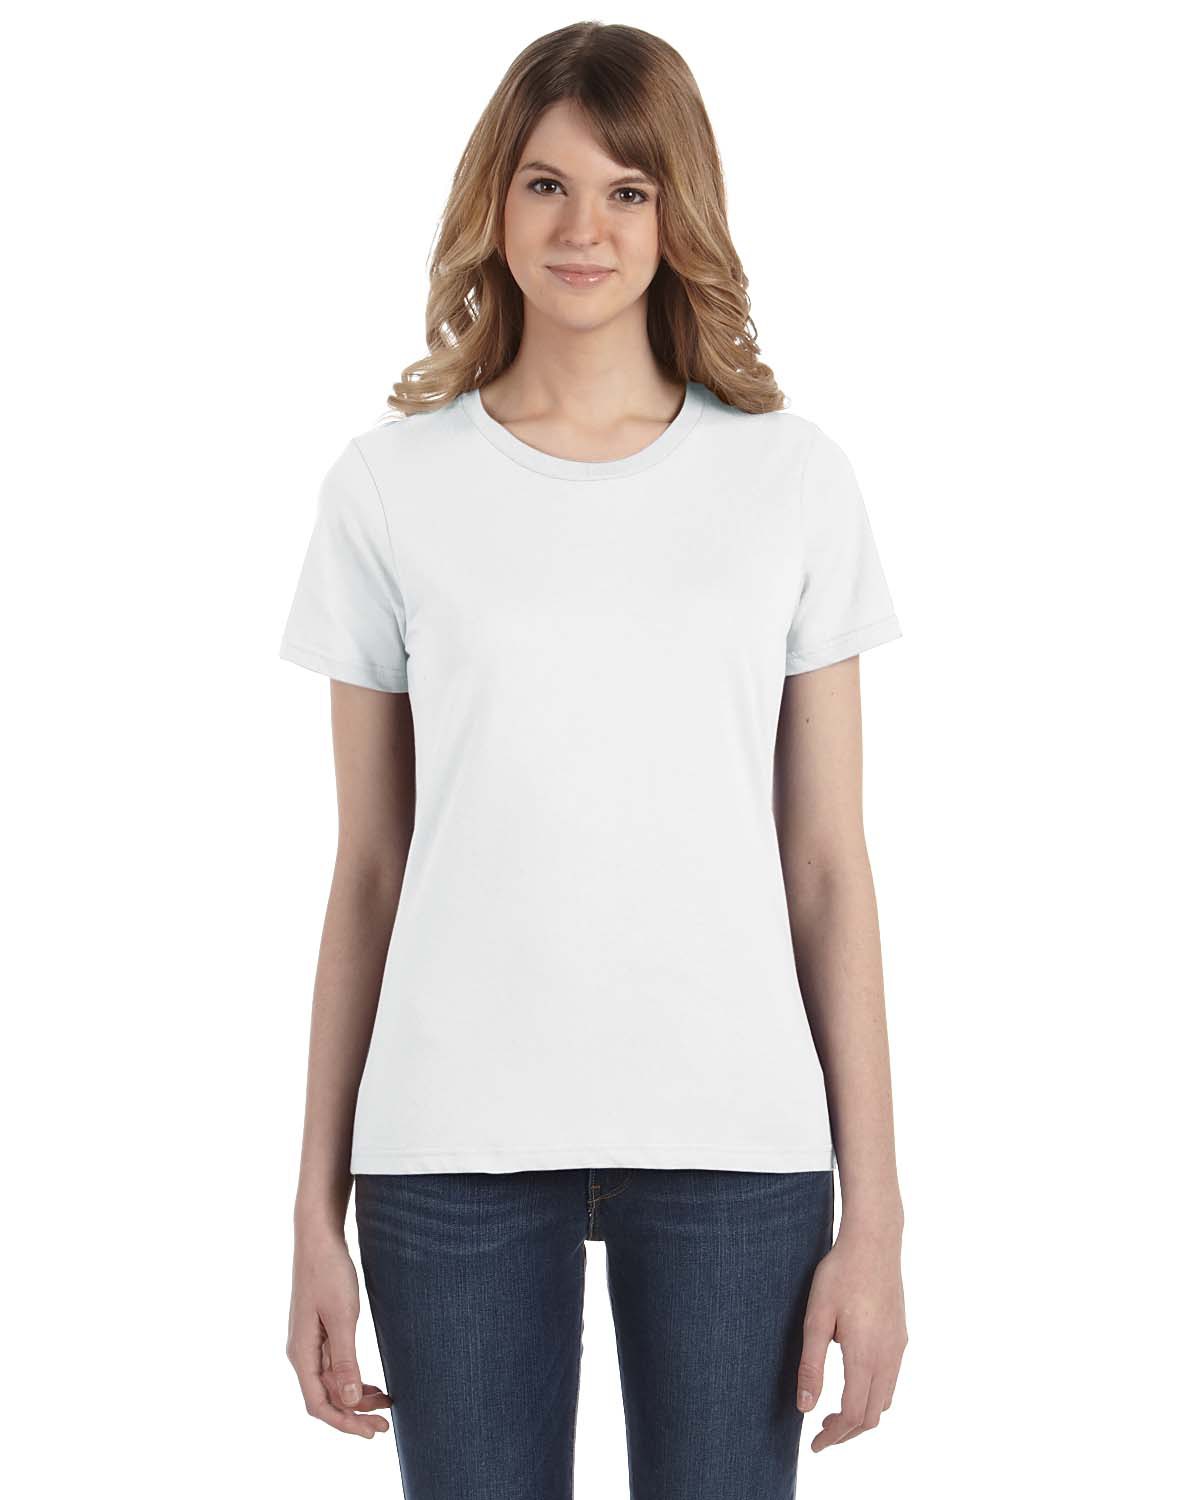 880 Anvil Ladies' Lightweight T-Shirt